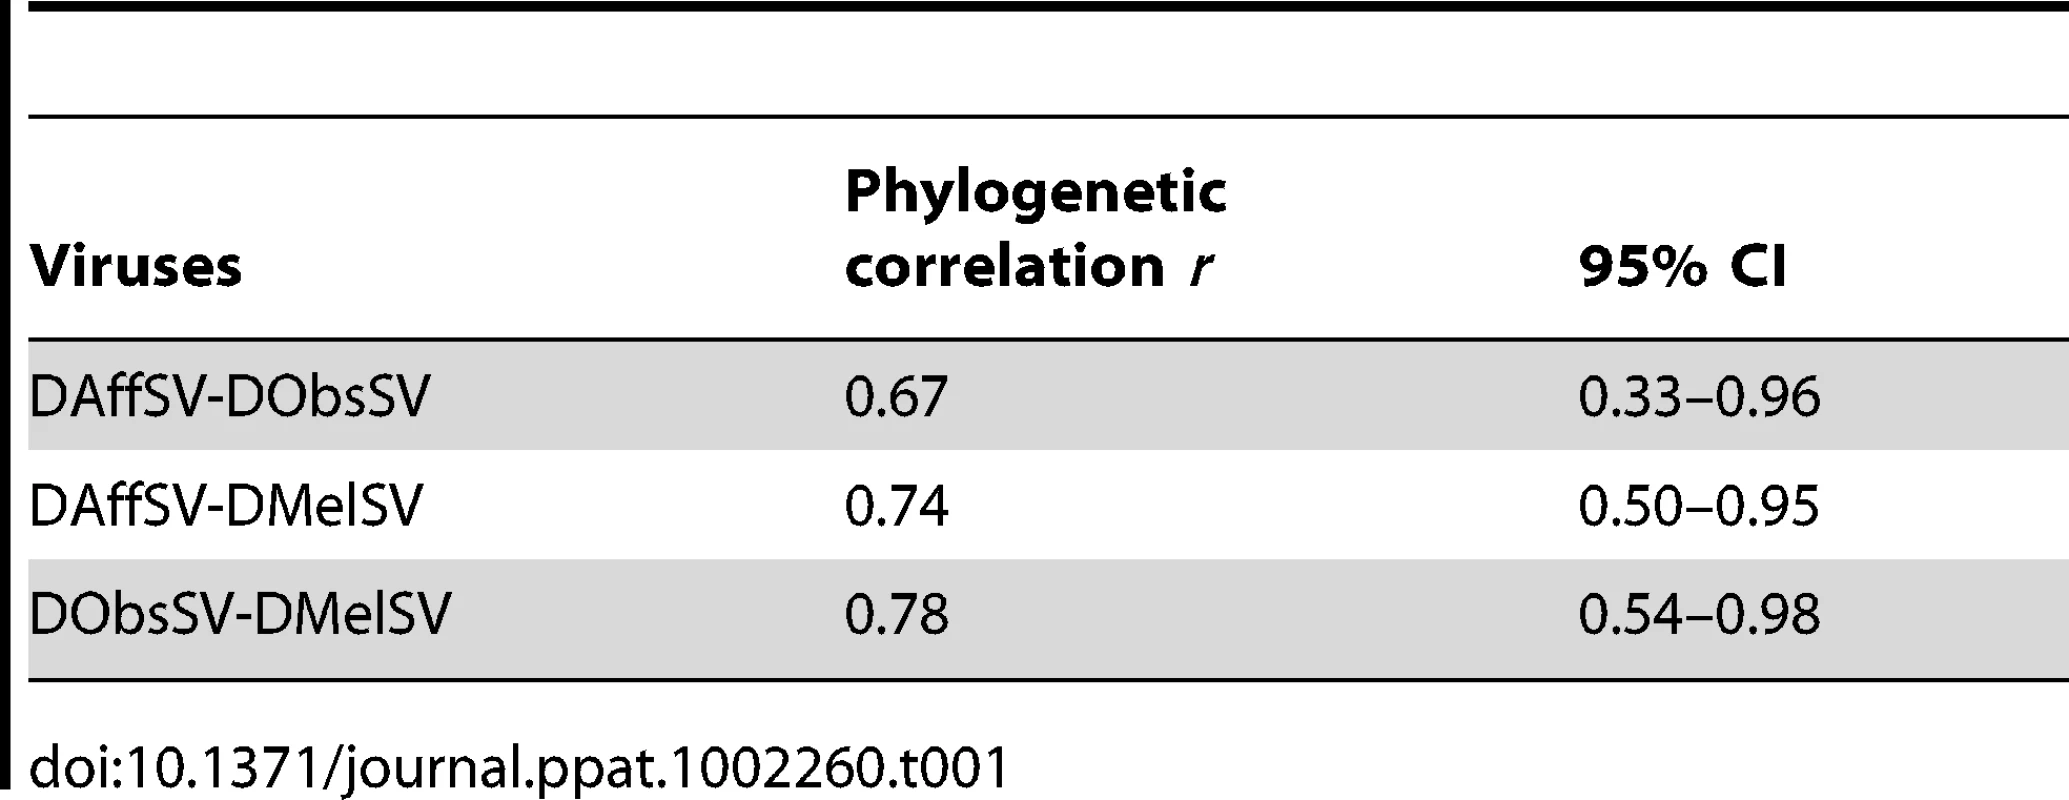 Phylogenetic correlations and 95% CI between each pair of viruses.